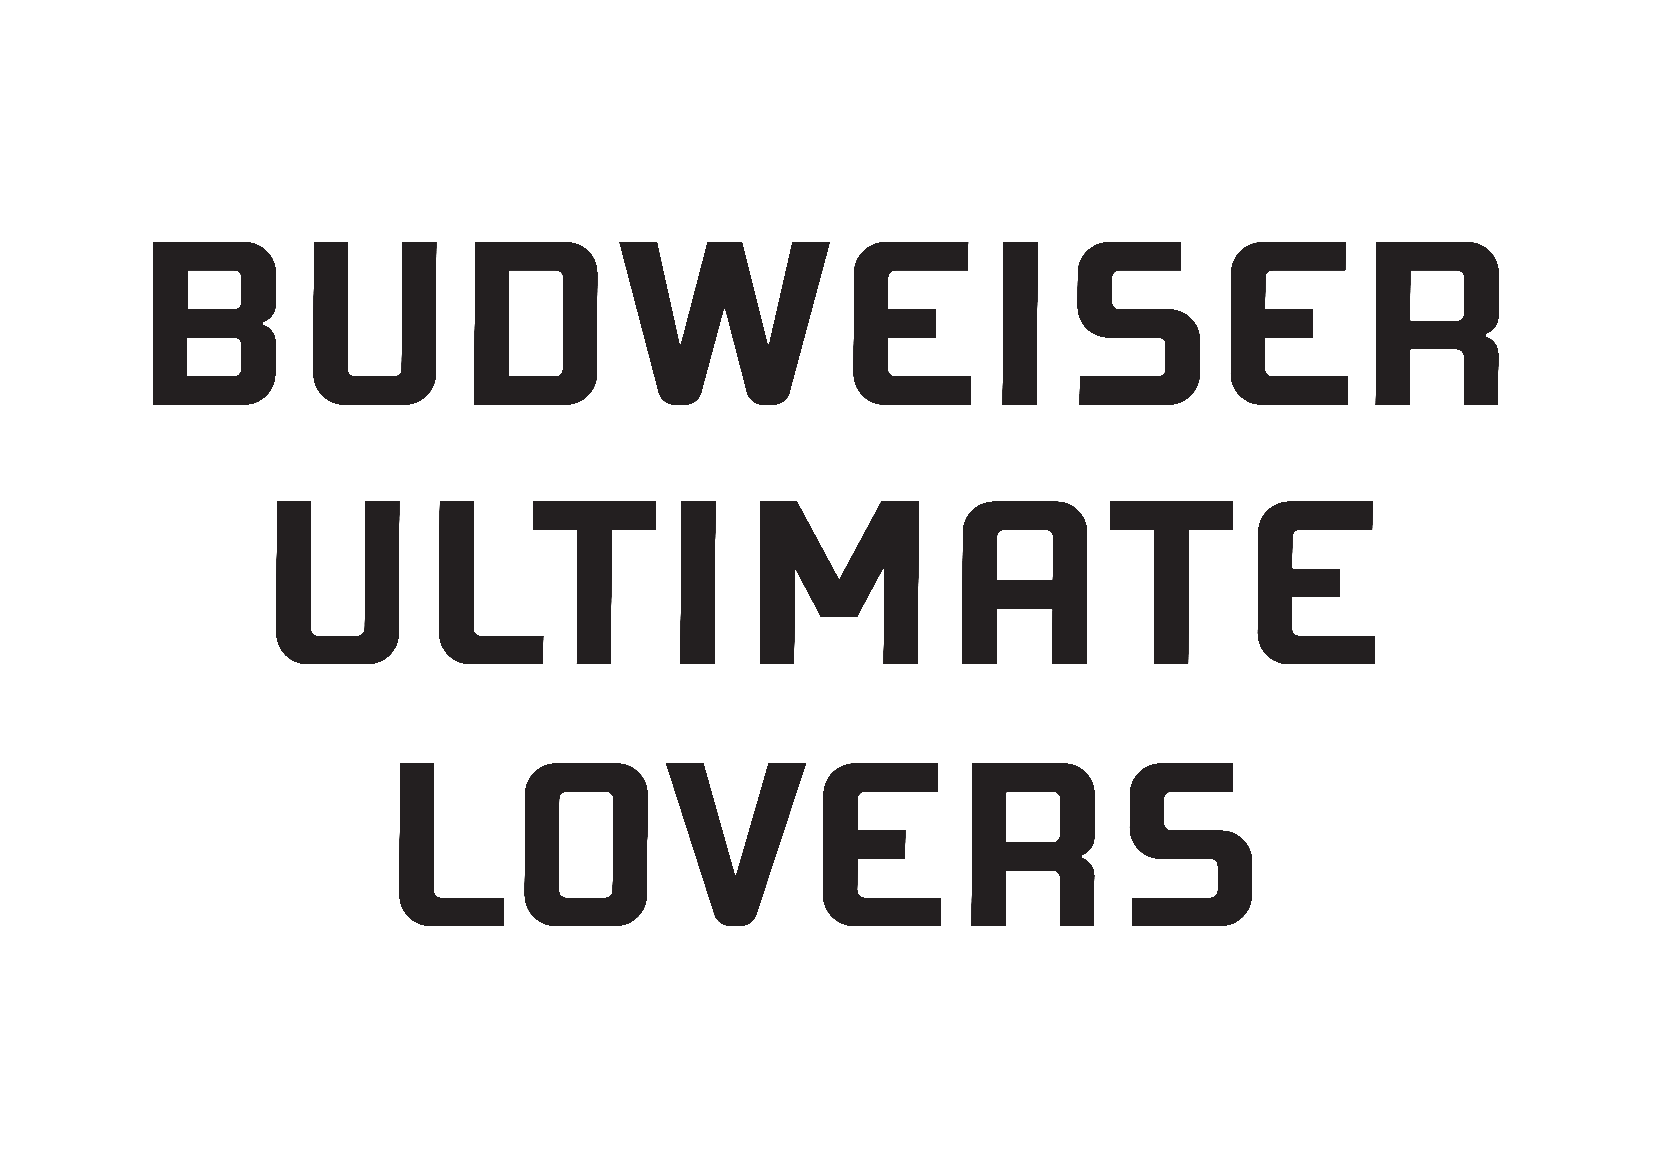 Budweiser Ultimate Lovers logo